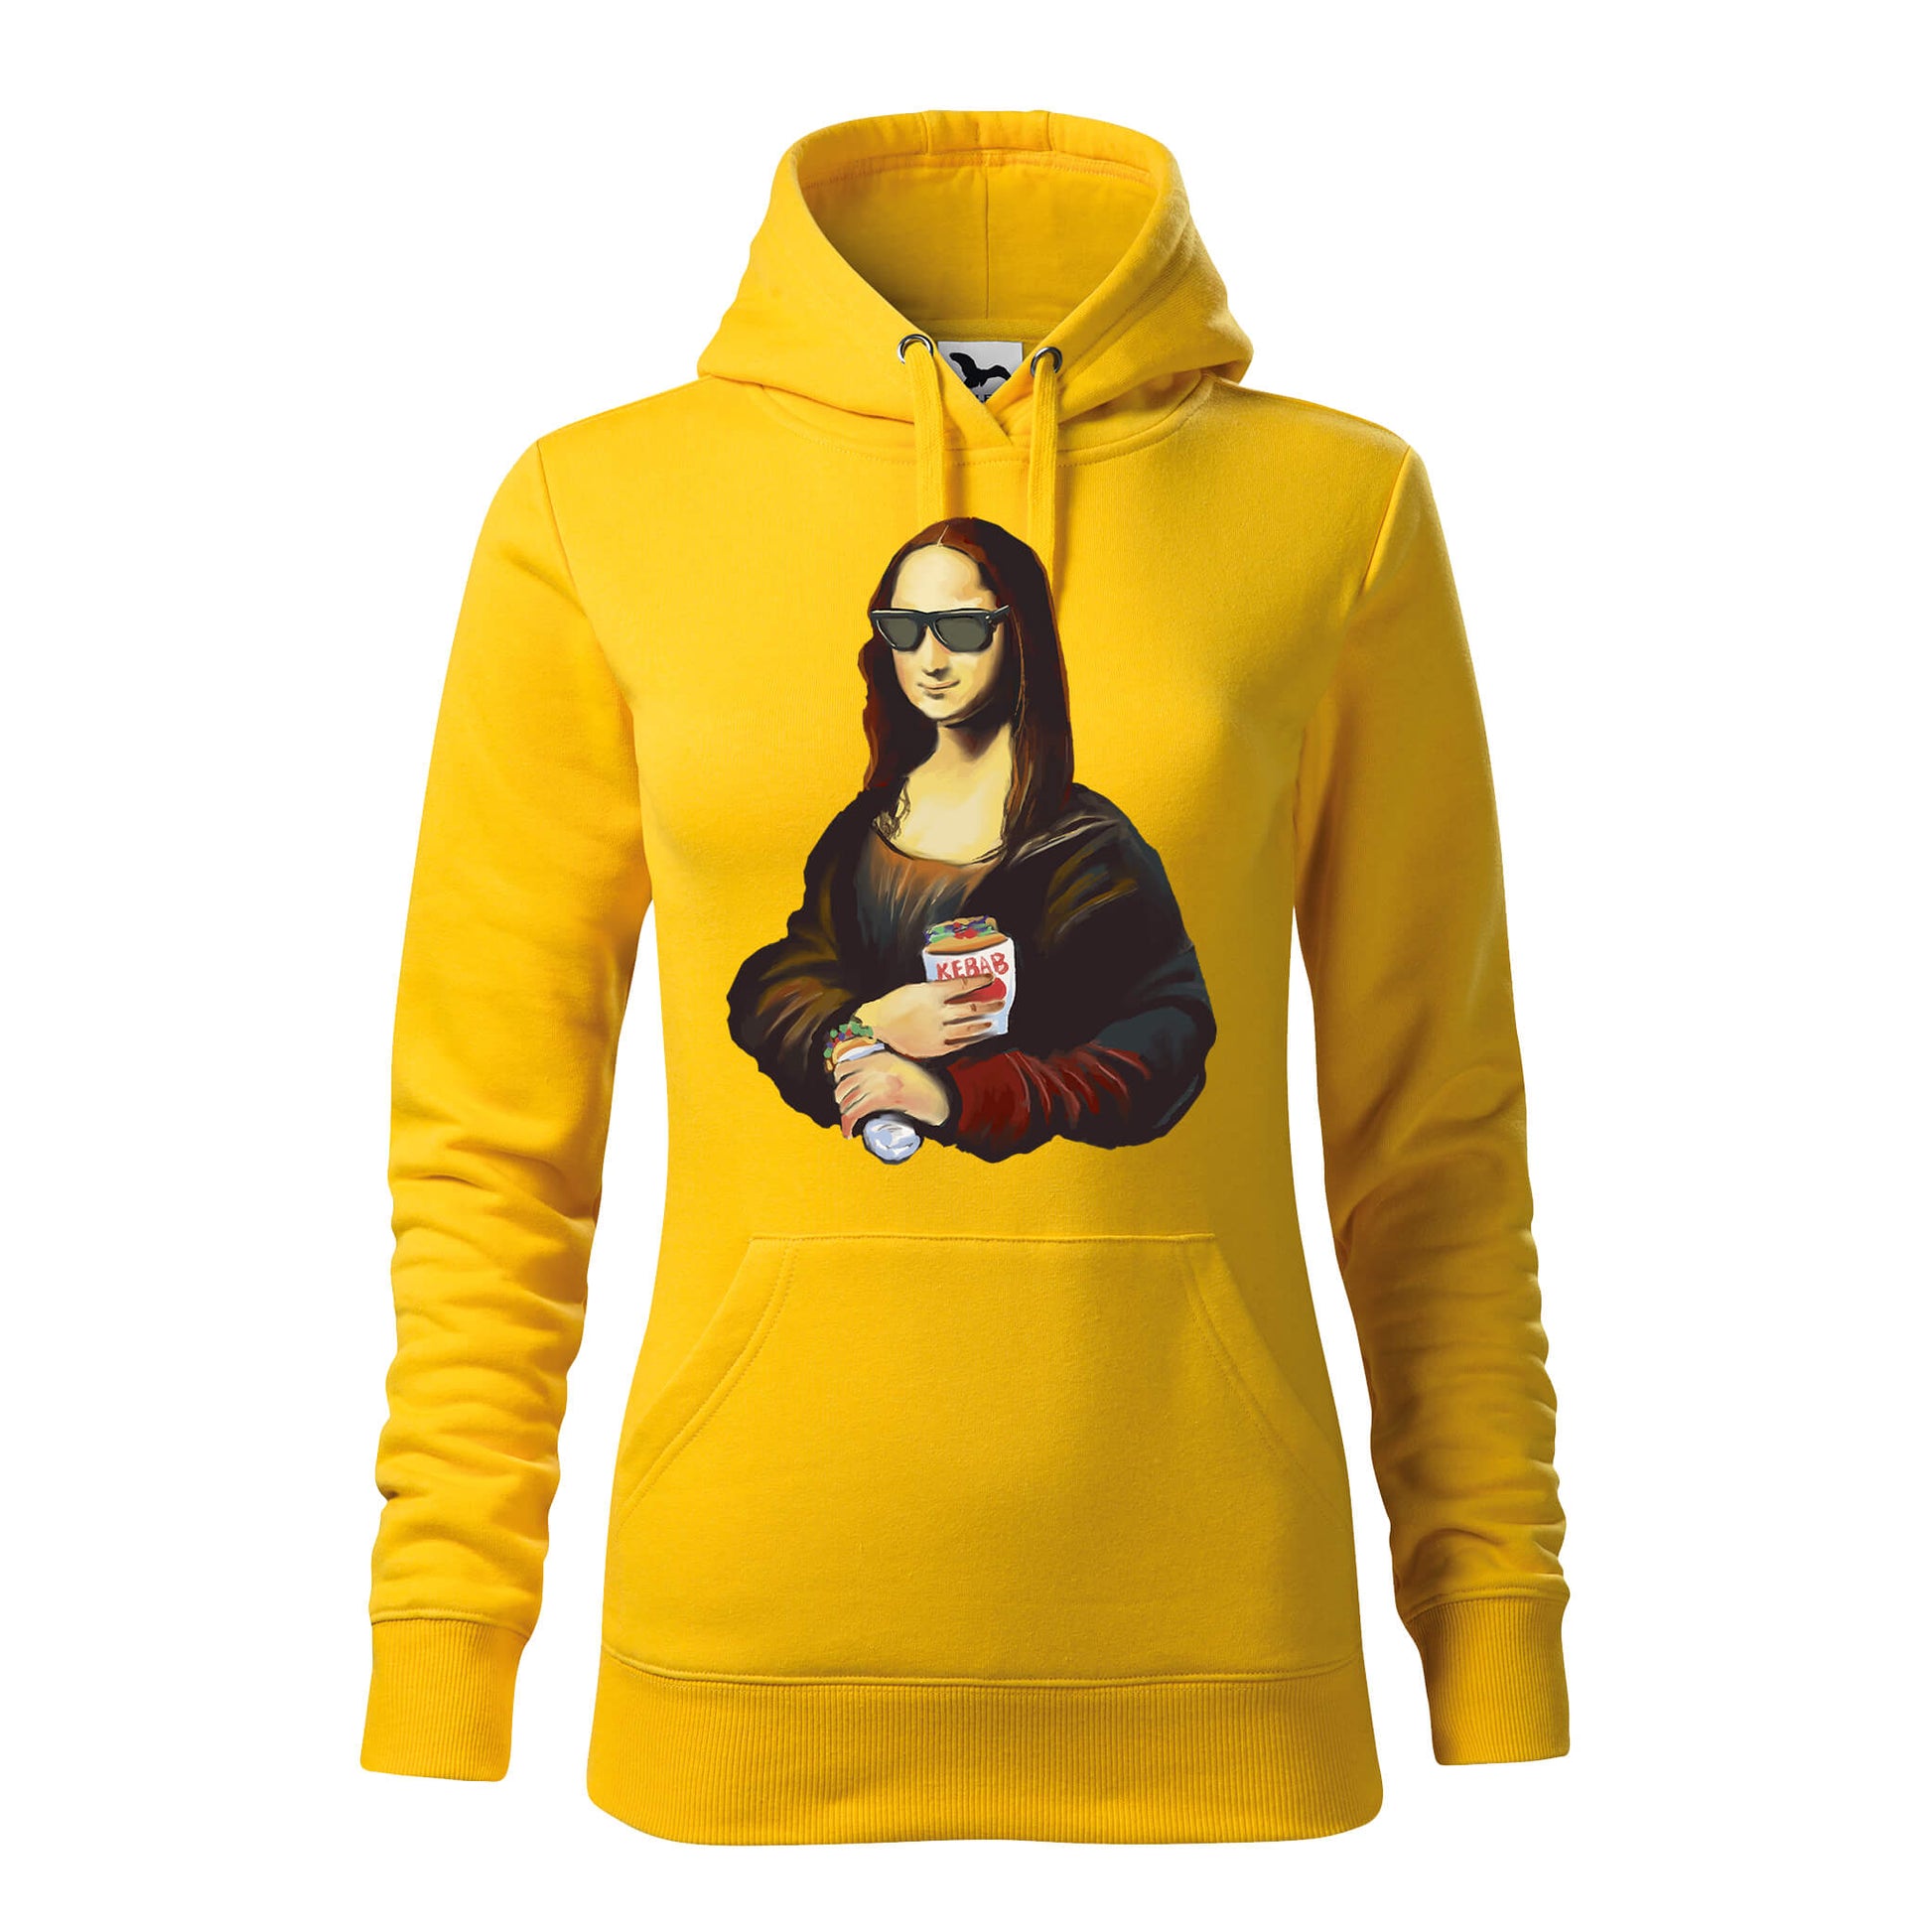 Mona lisa kebab hoodie - rvdesignprint